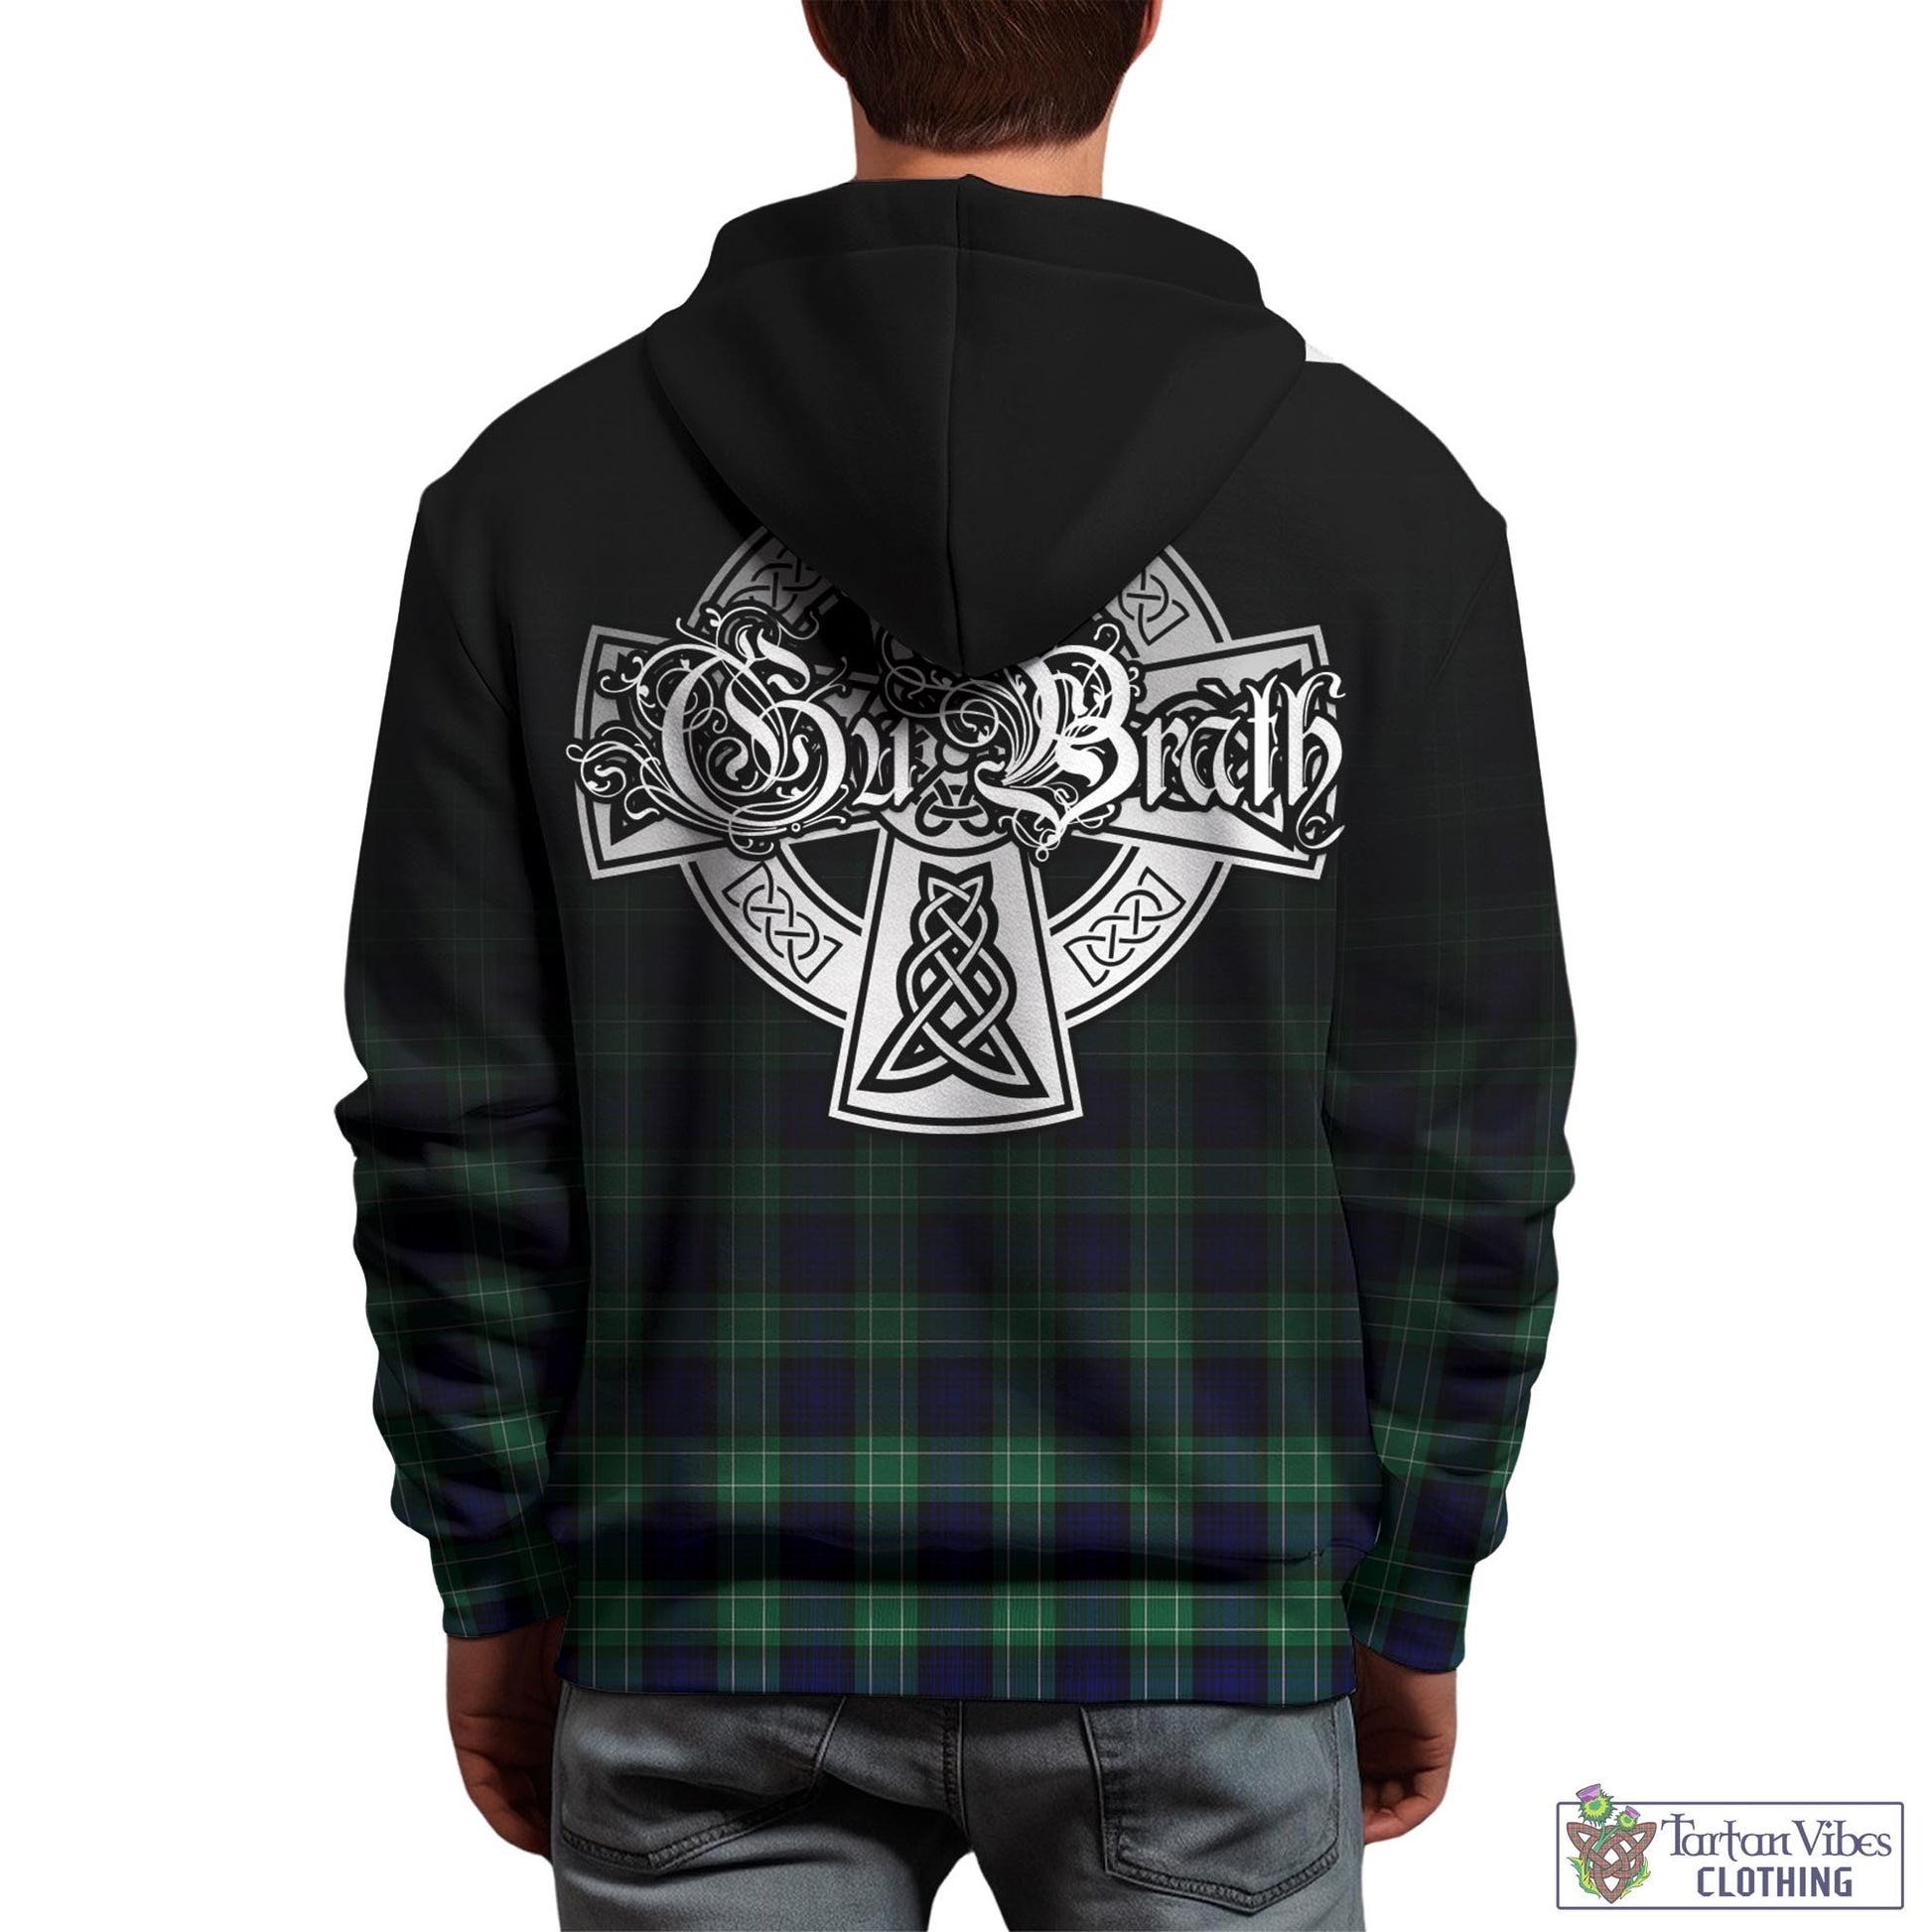 Tartan Vibes Clothing Abercrombie Tartan Hoodie Featuring Alba Gu Brath Family Crest Celtic Inspired